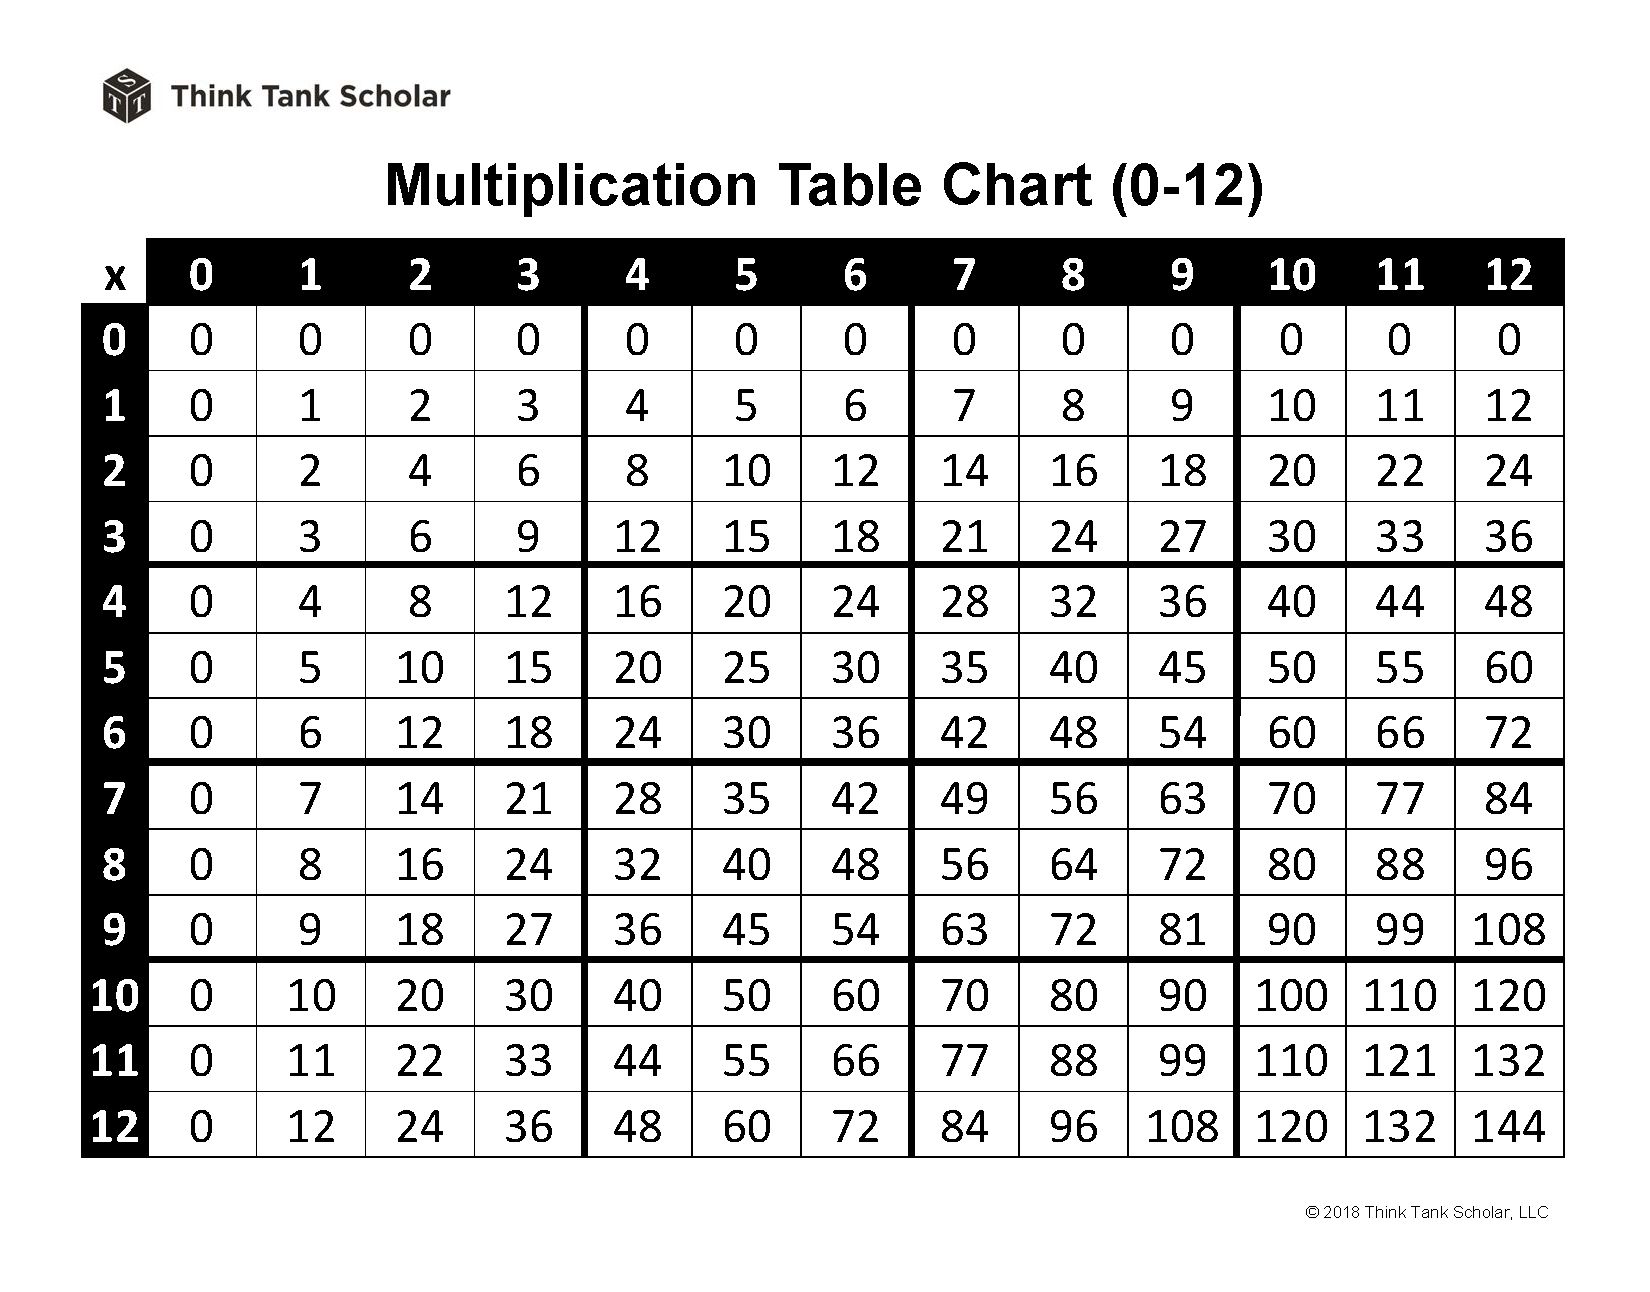 demonstration-imply-morgue-table-de-multiplication-de-22-loosely-hand-square